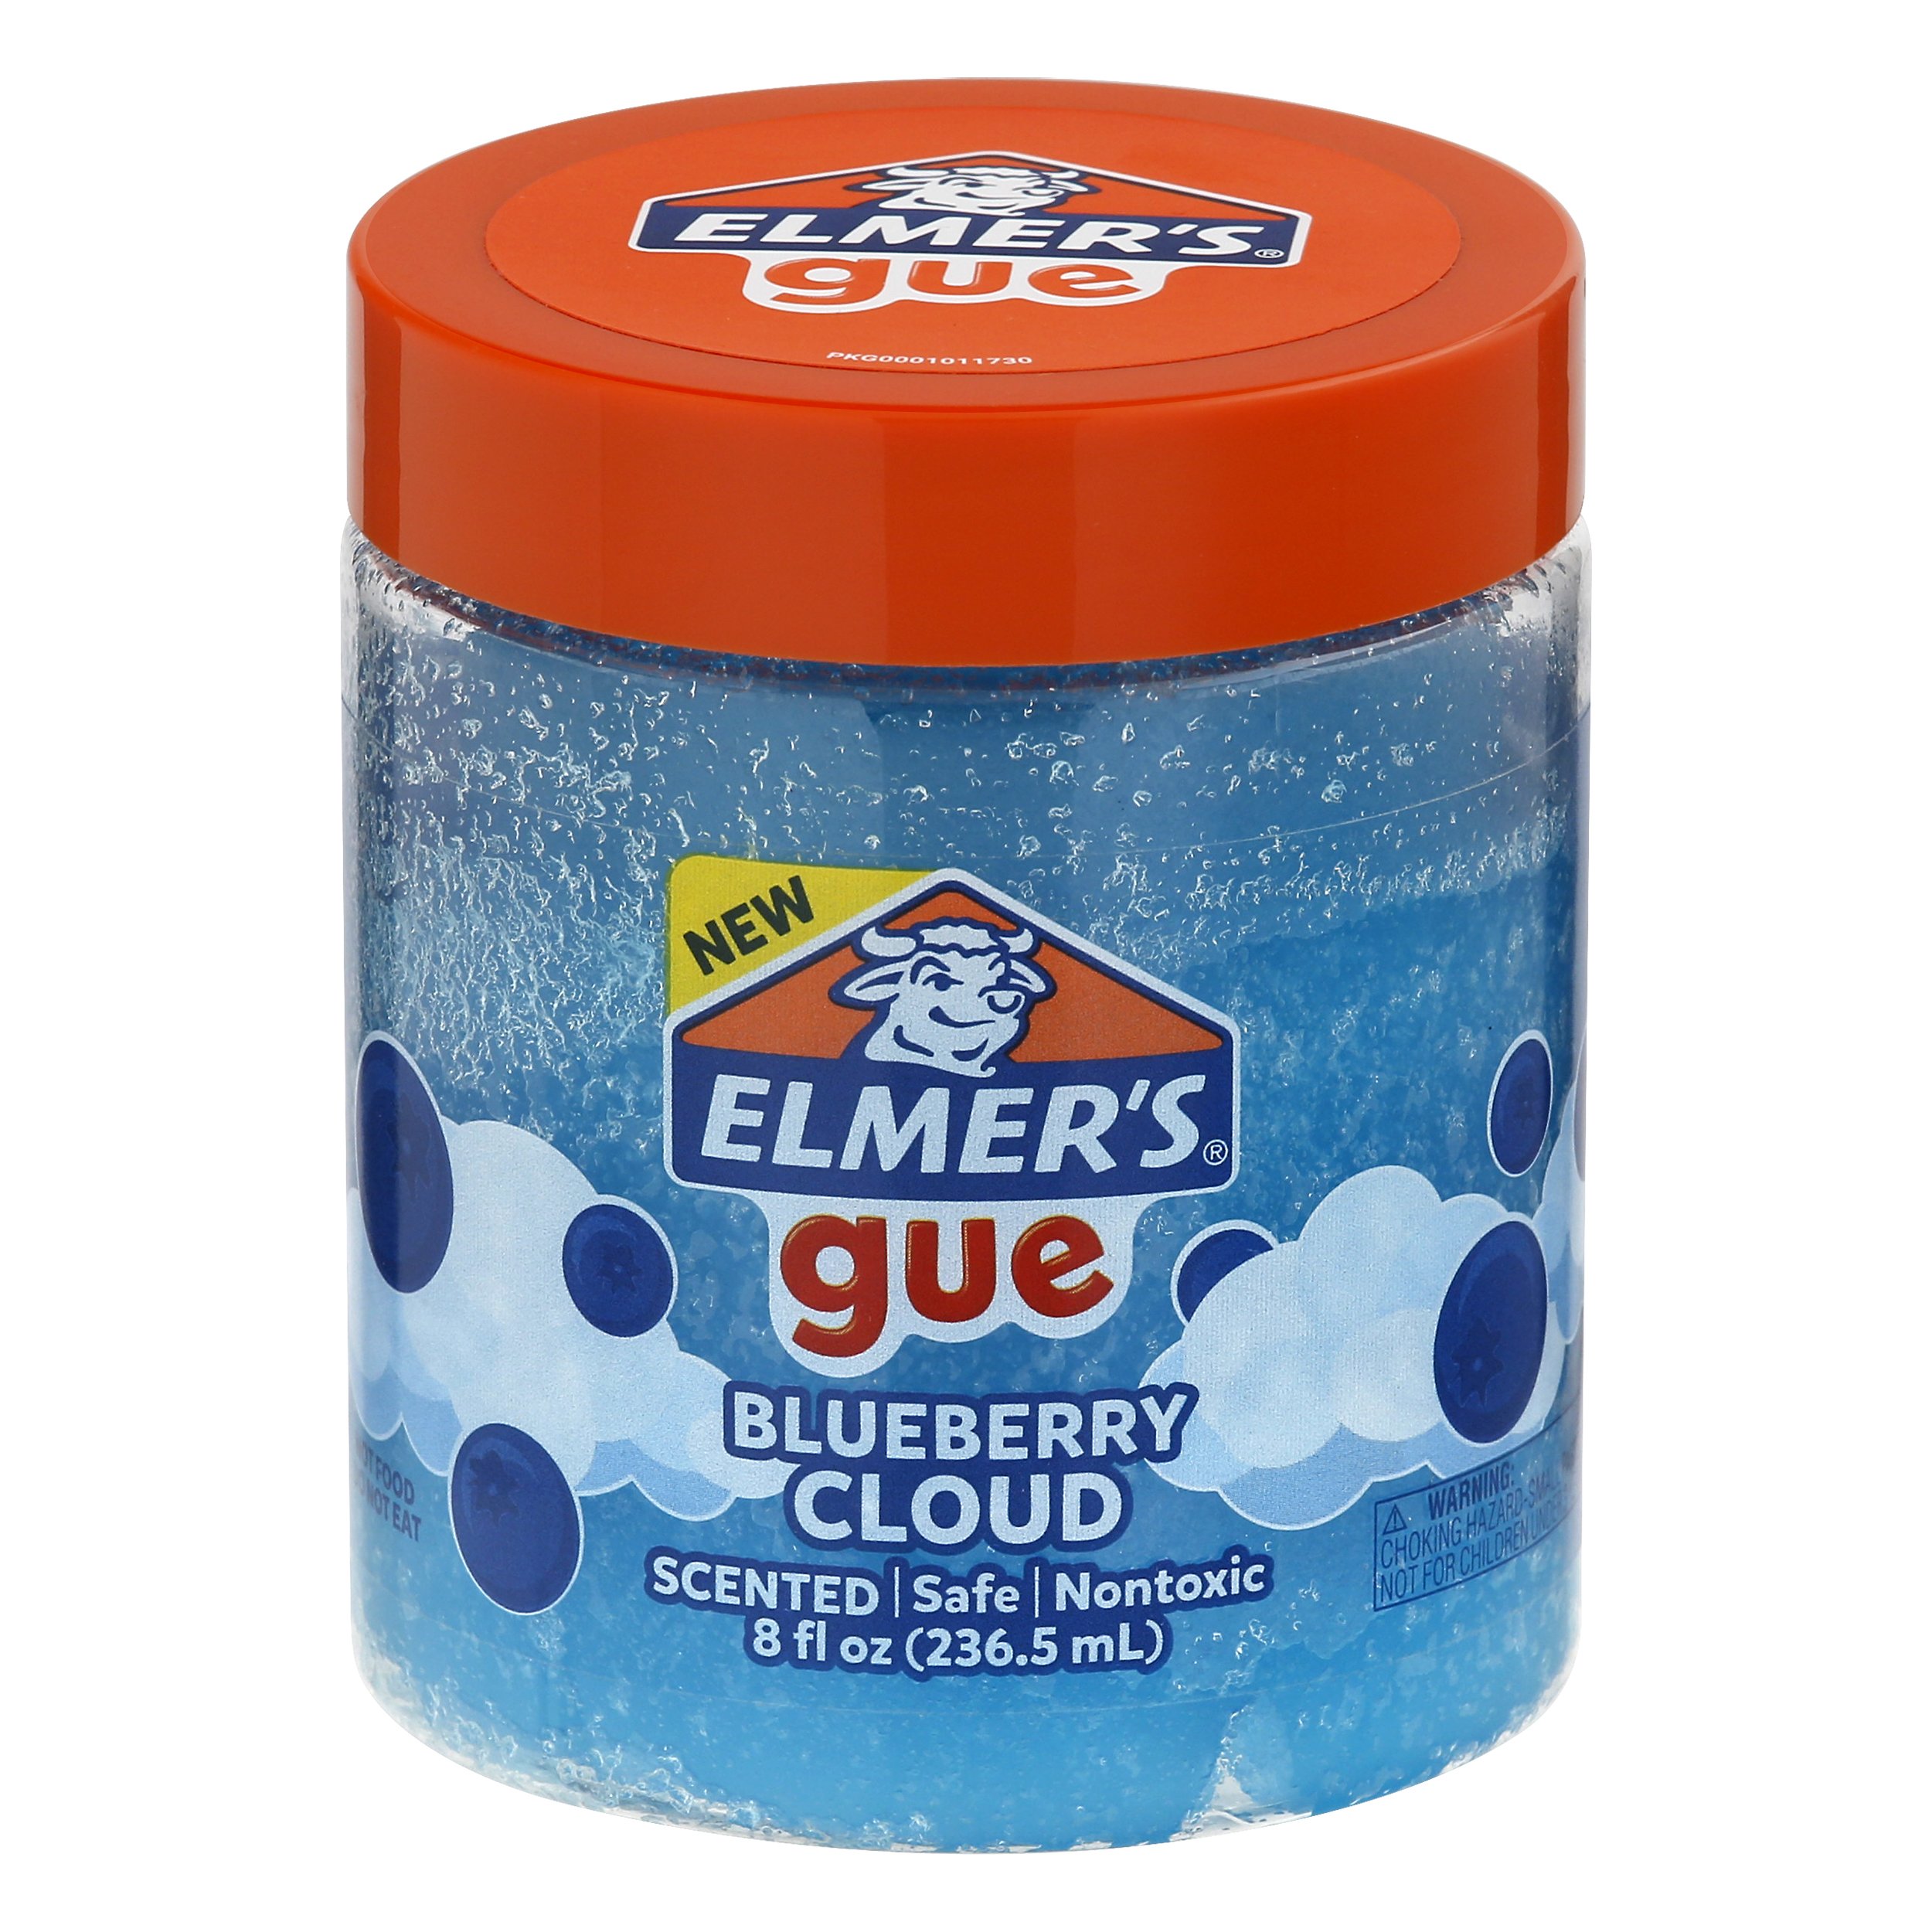 Elmer's Gue Pre-Made Slime 8oz-Blueberry Cloud, 1 count - Foods Co.